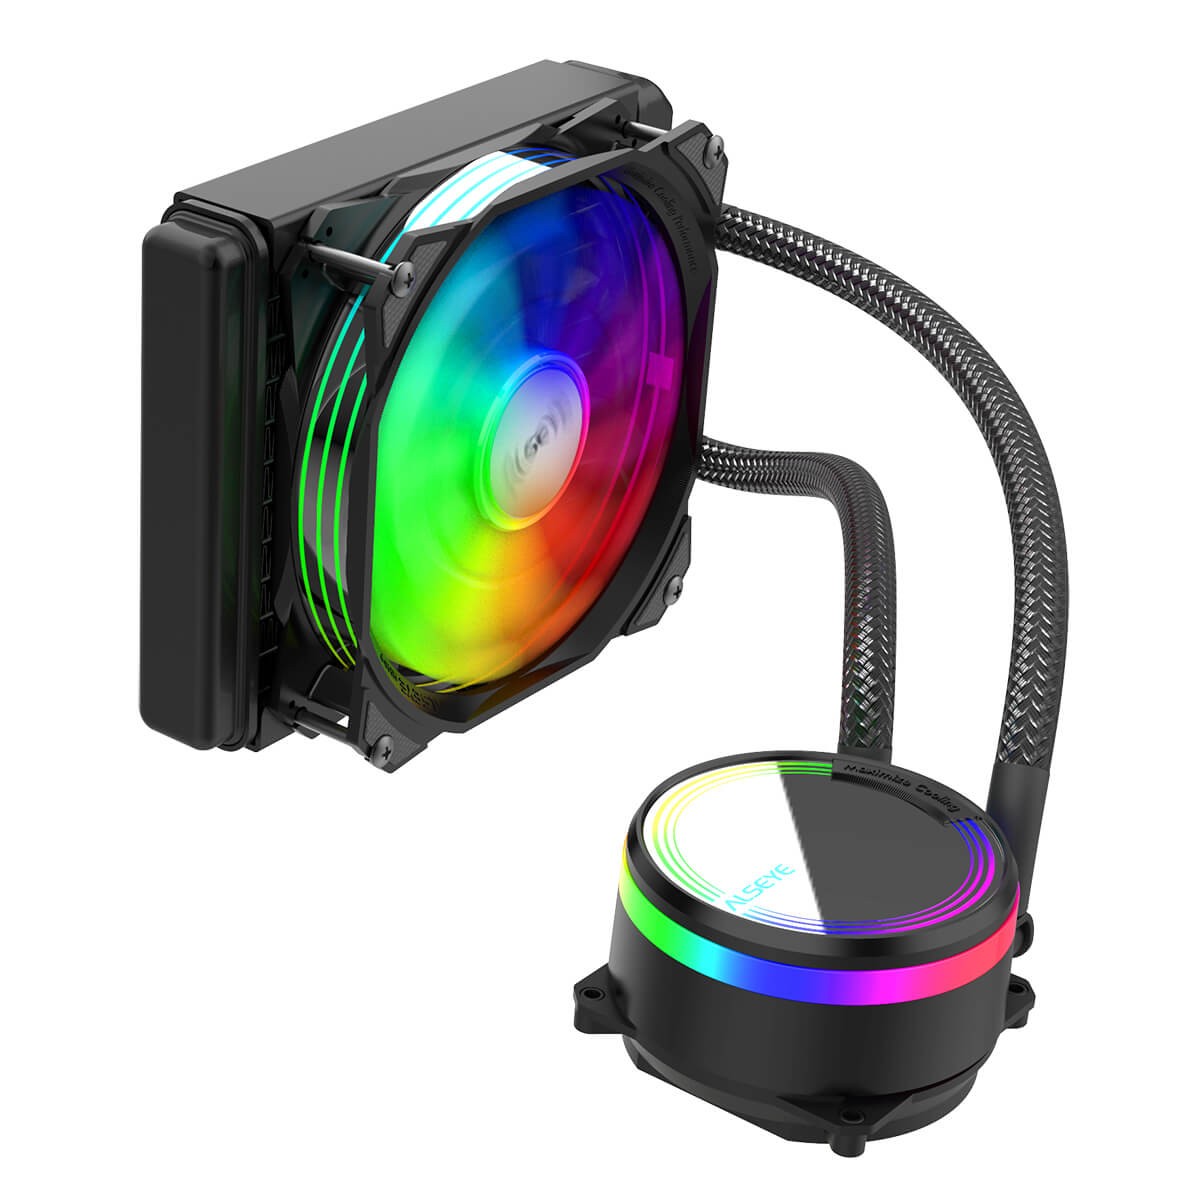 Water Cooler Alseye M120 Black, 120mm, RGB, Intel-AMD